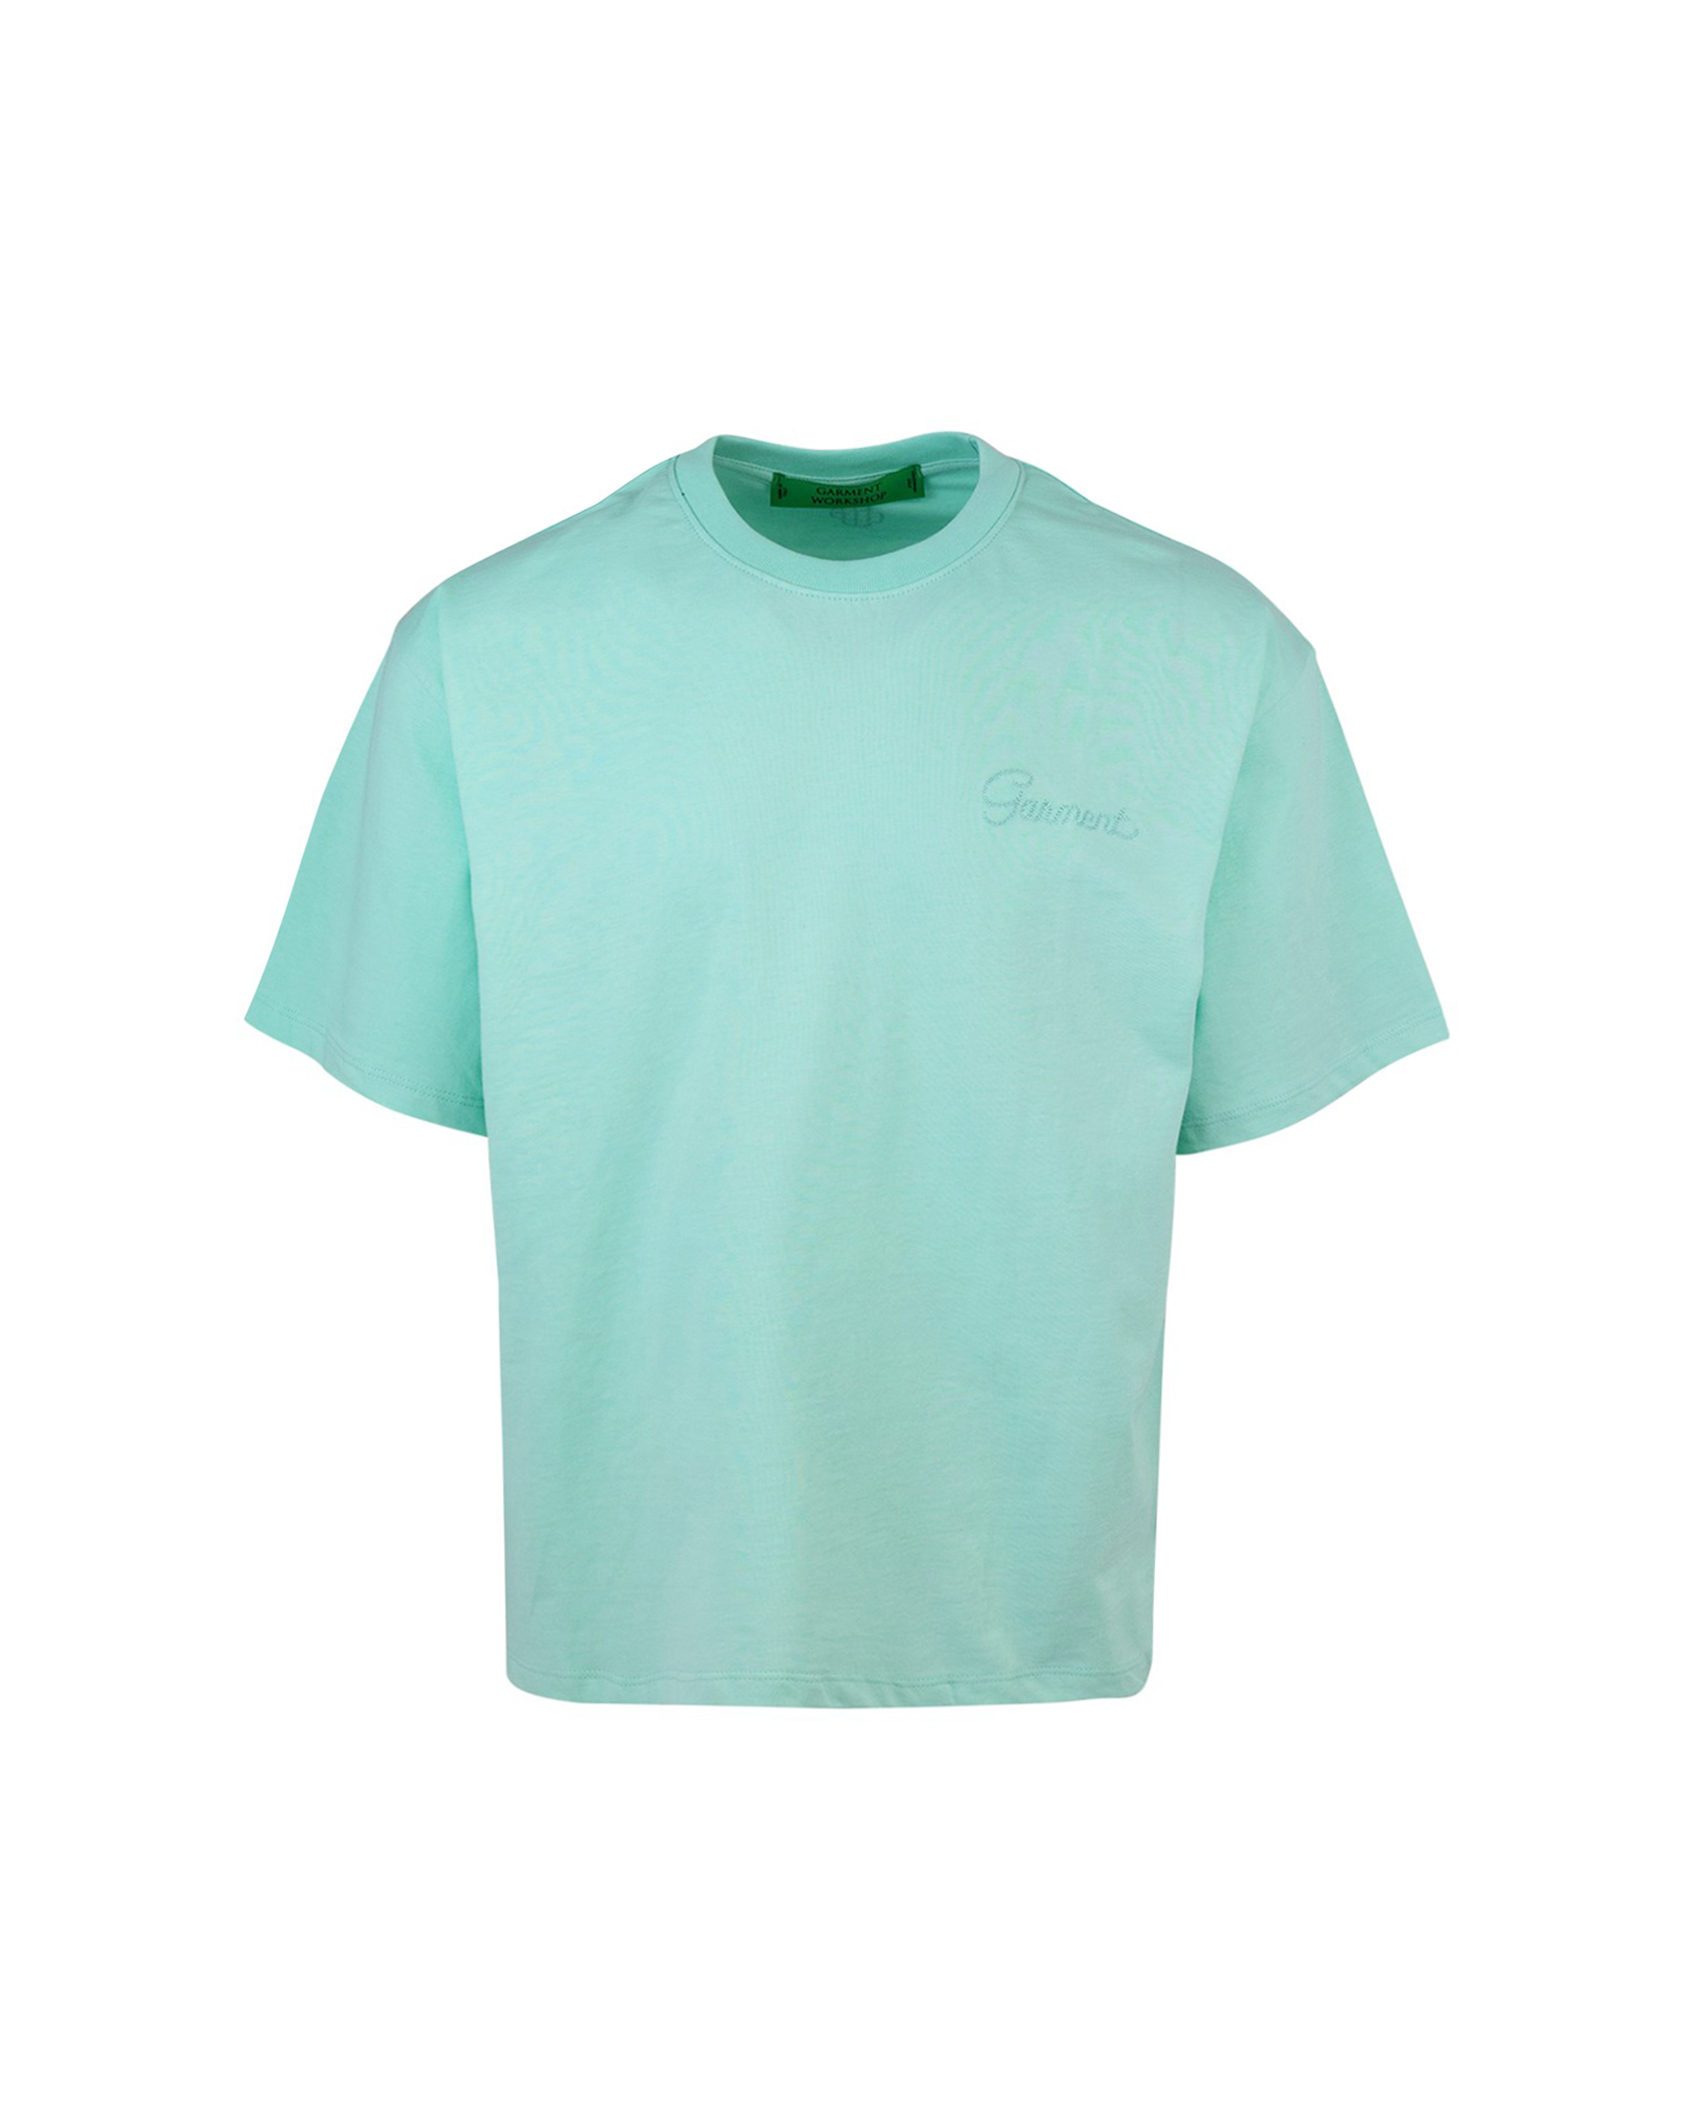 Garment Workshop T-shirt Basica Con Ricamo Verde Acqua In Gw029viridian Green